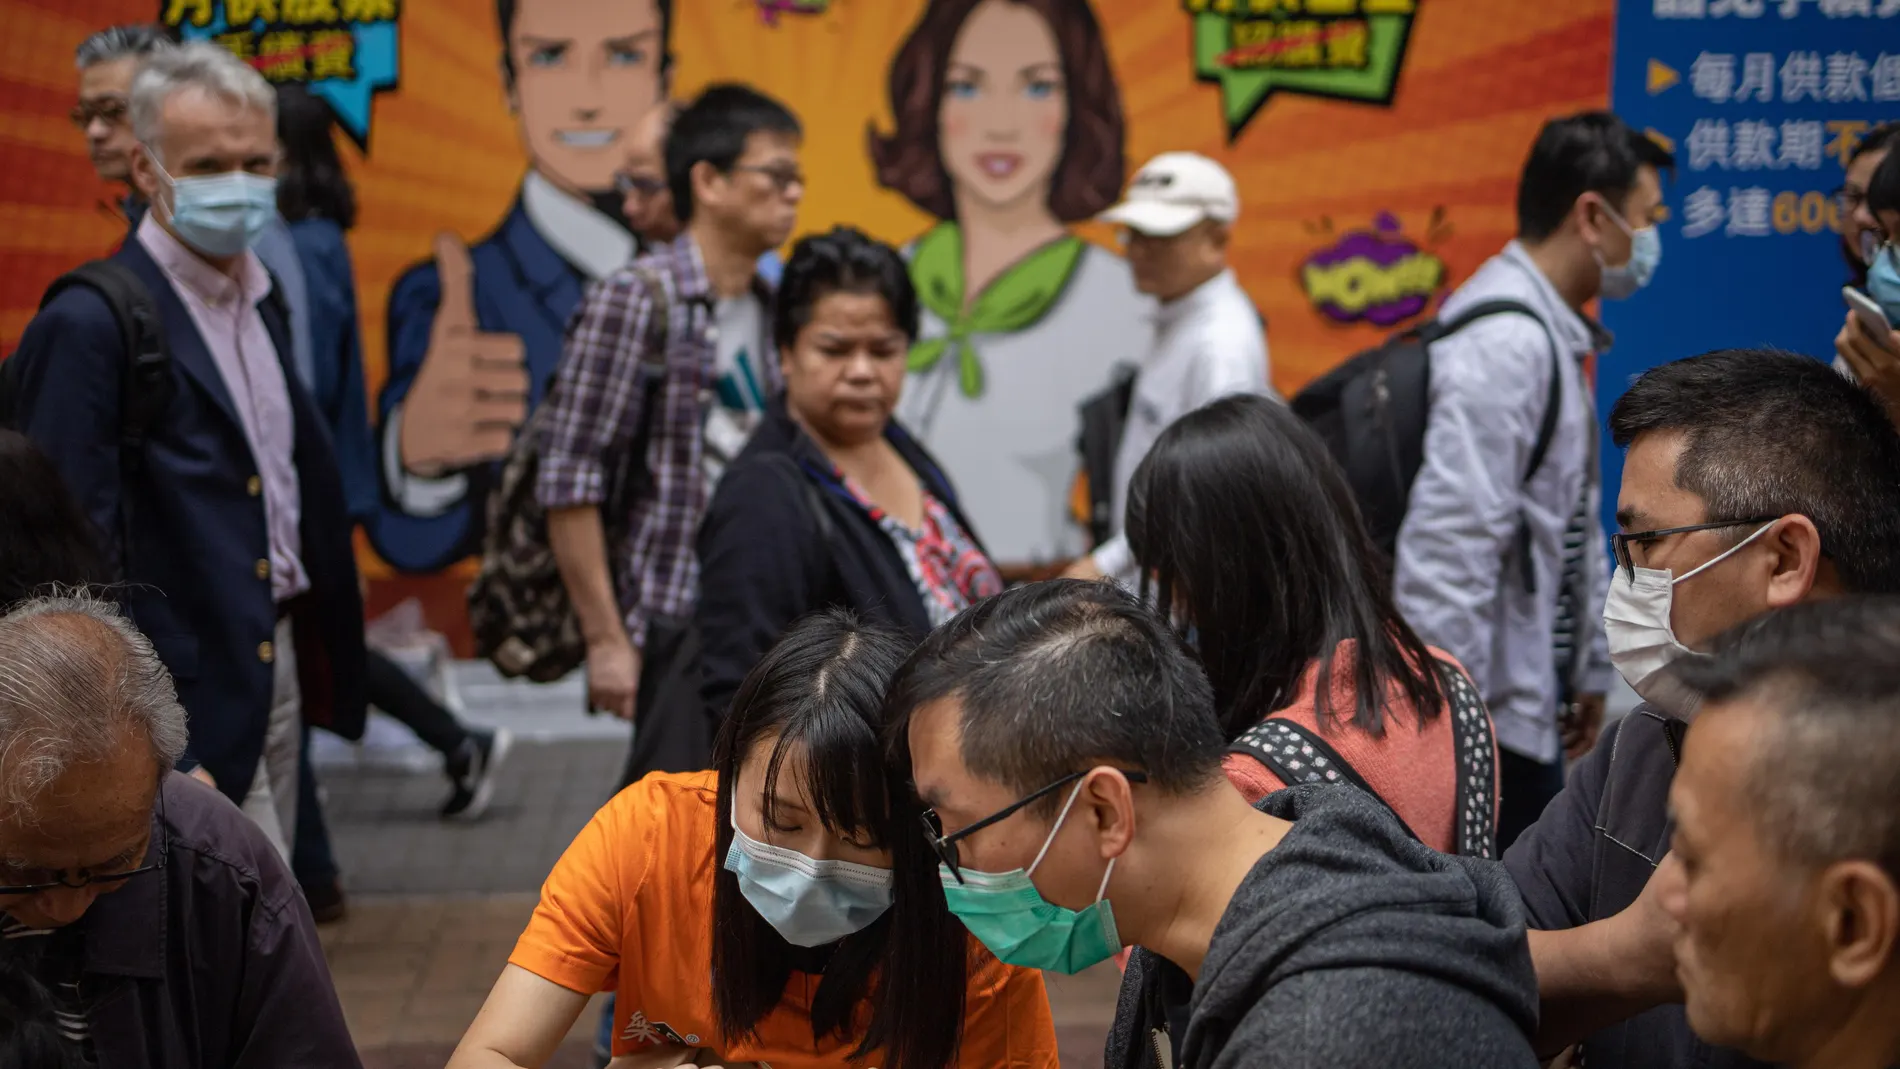 China grapples to contain coronavirus outbreak